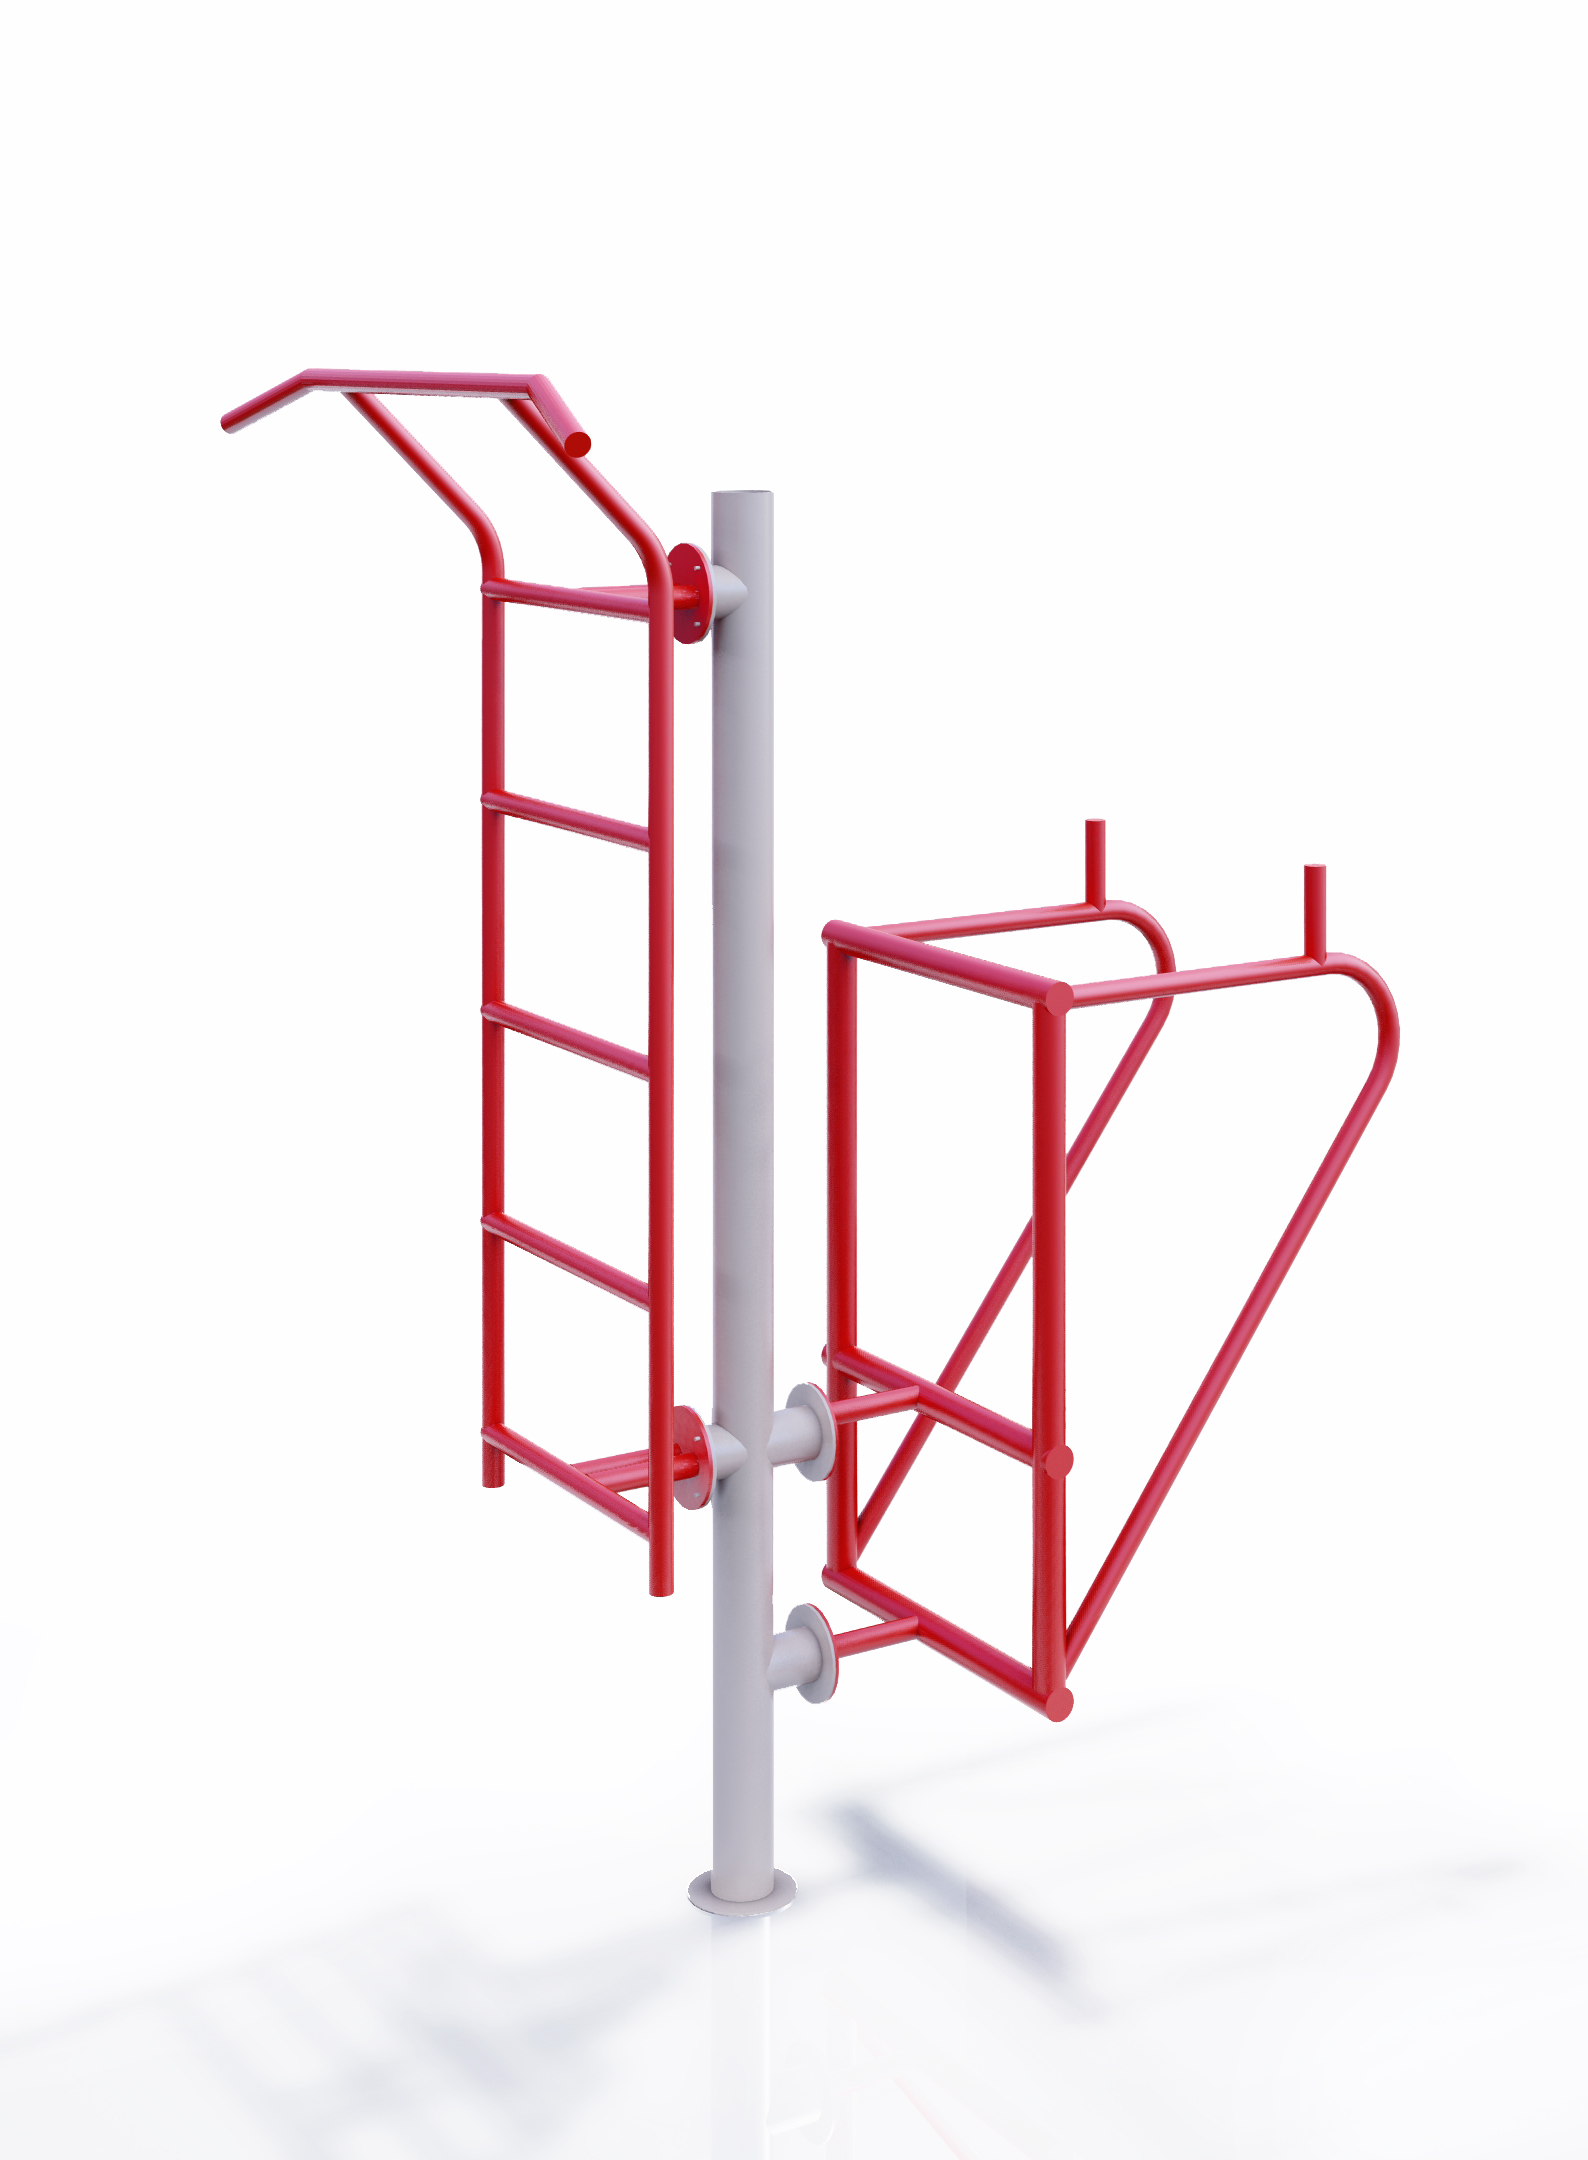 Ladder/legs raise